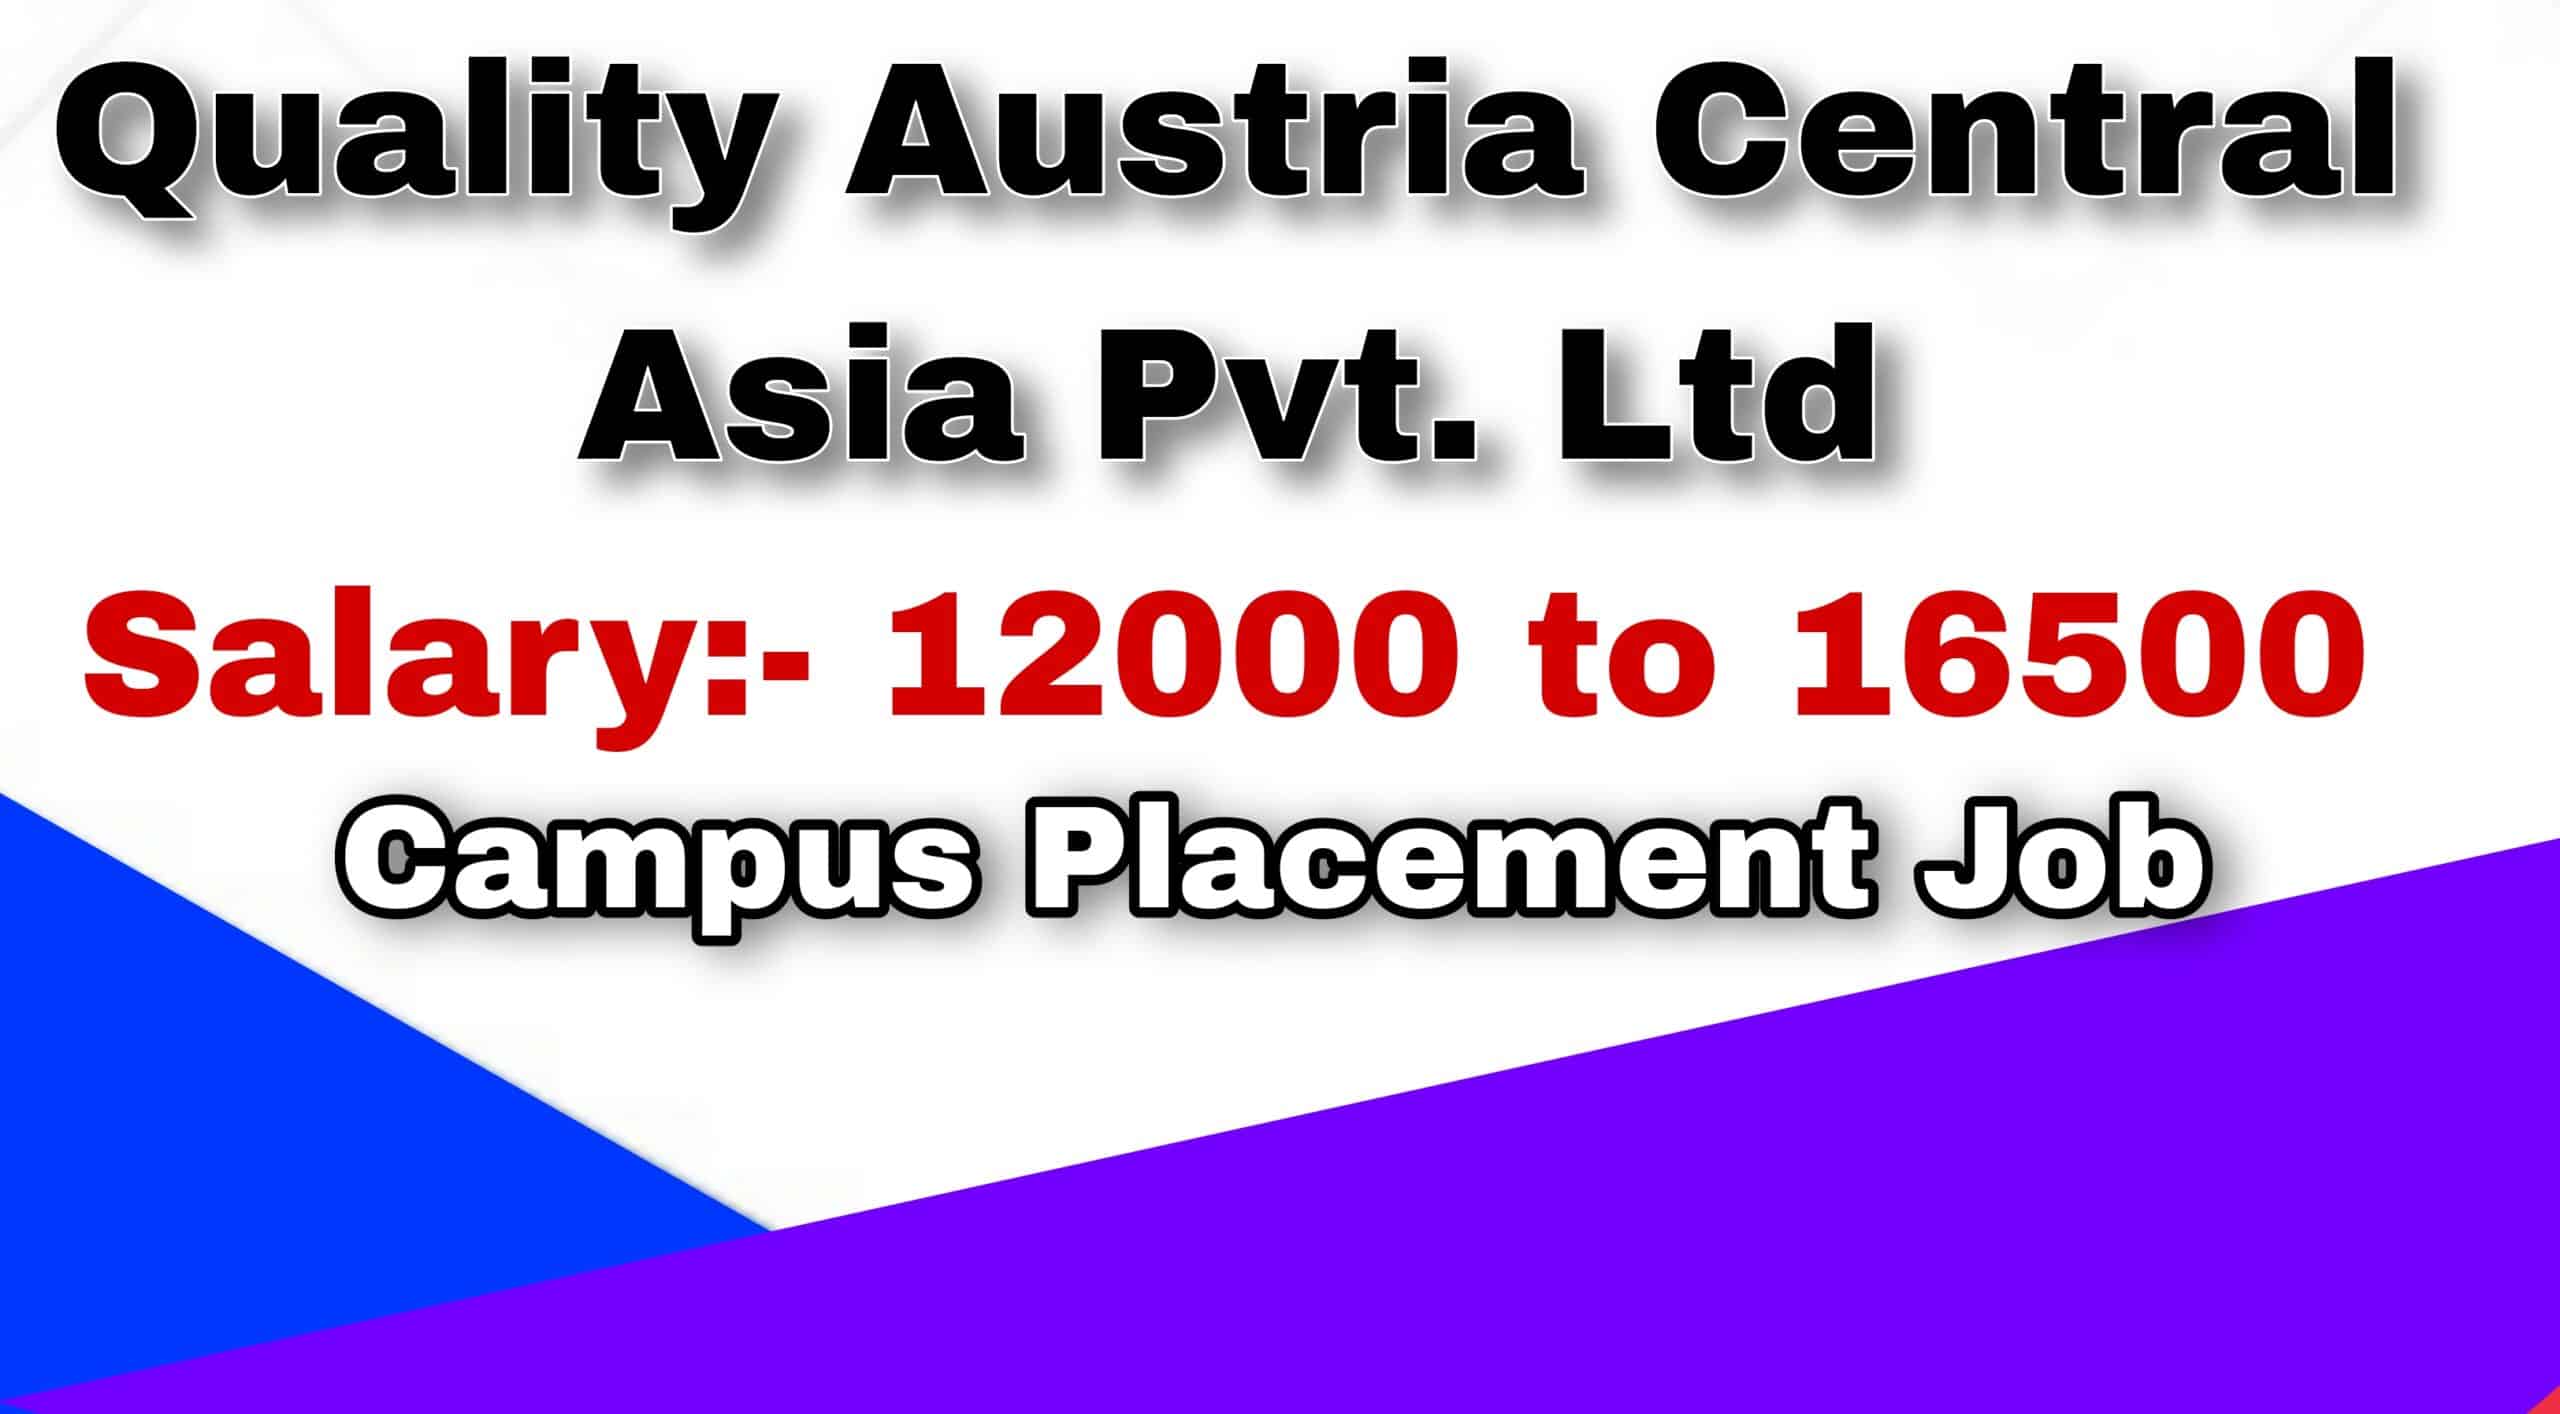 Quality Austria Central Asia Pvt. Ltd Company job